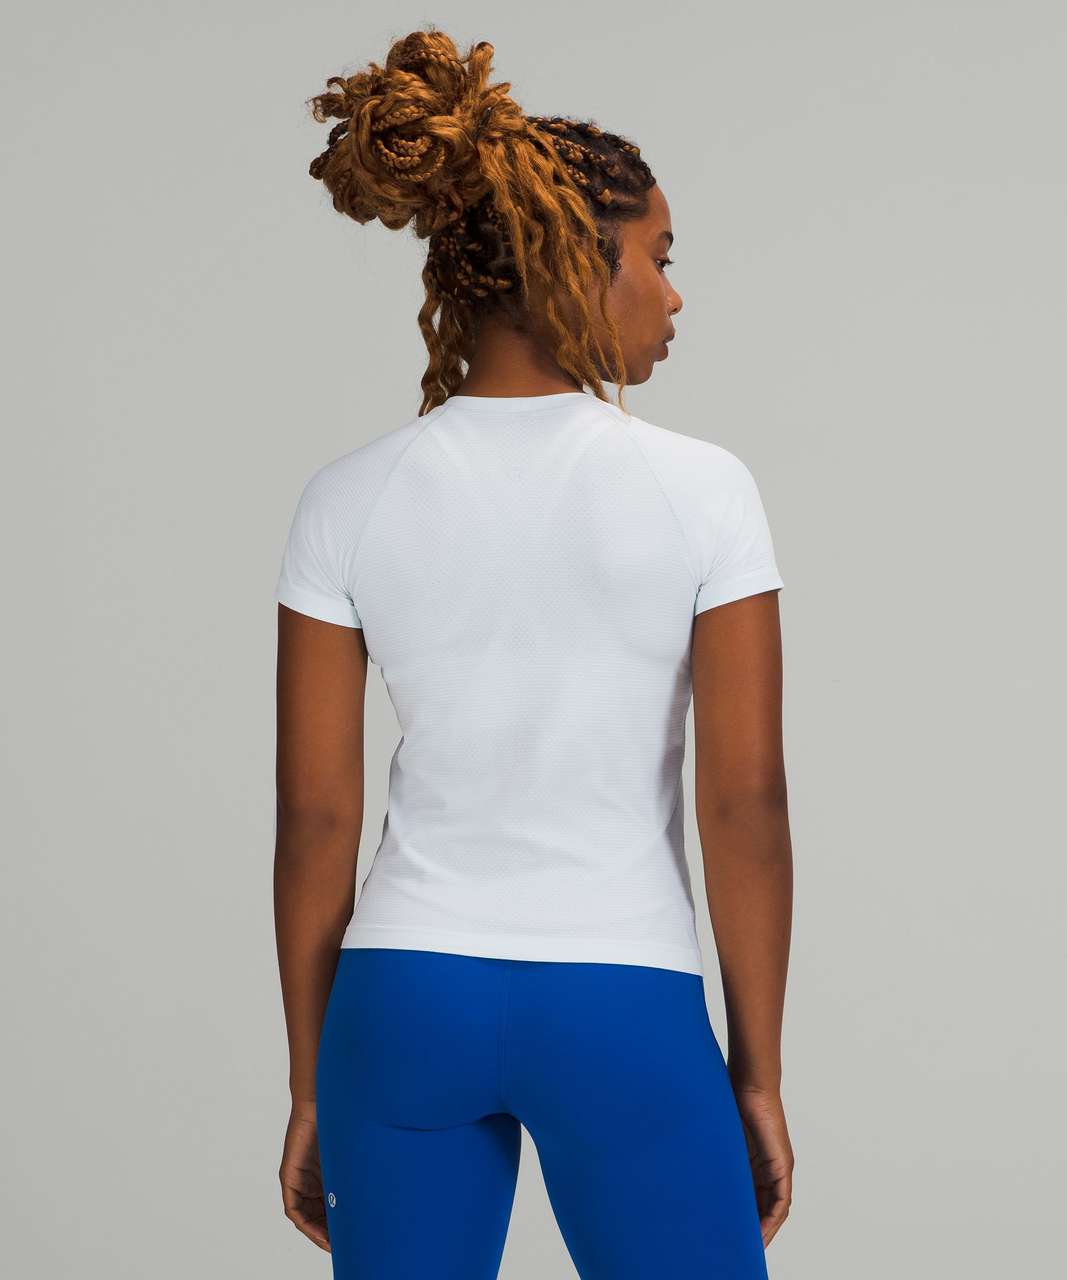 Lululemon Swiftly Tech Short Sleeve Shirt 2.0 *Race Length - Ocean